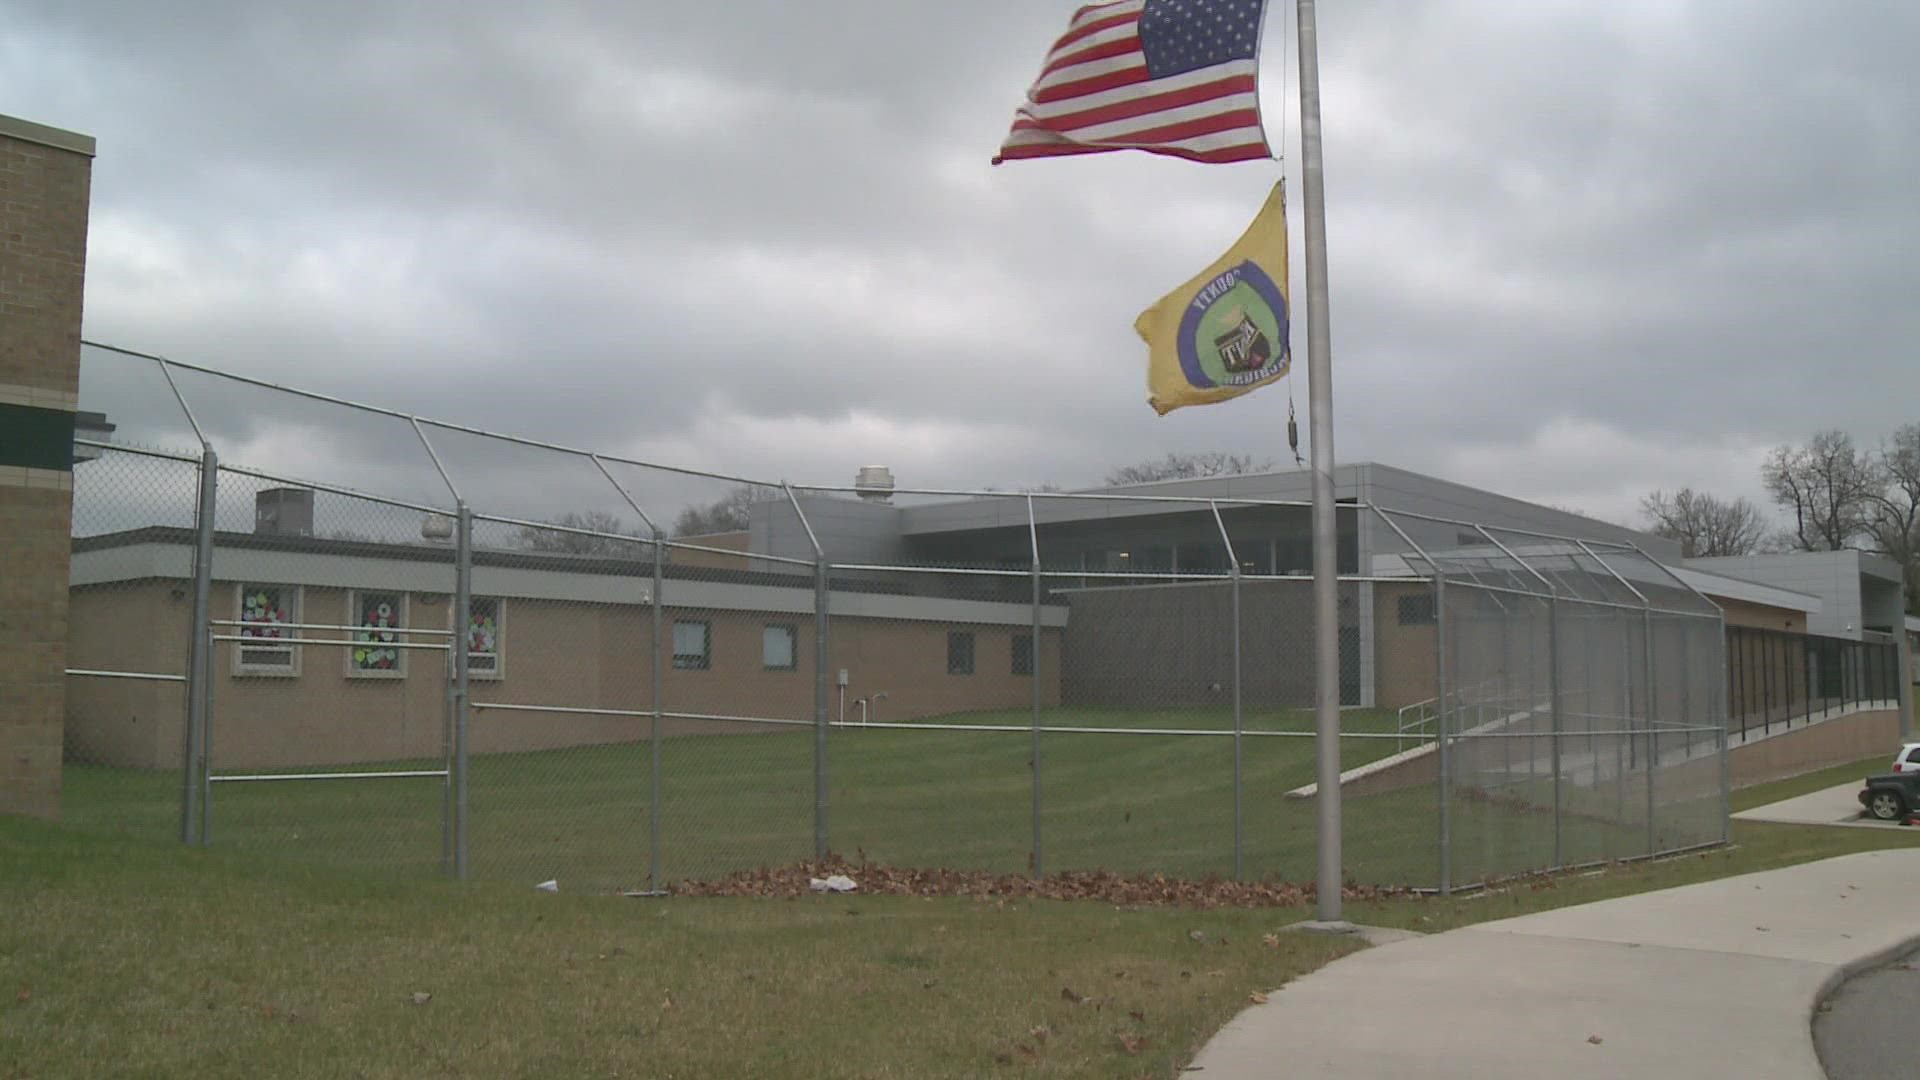 A Look Inside The Kent Co Juvenile Detention Center